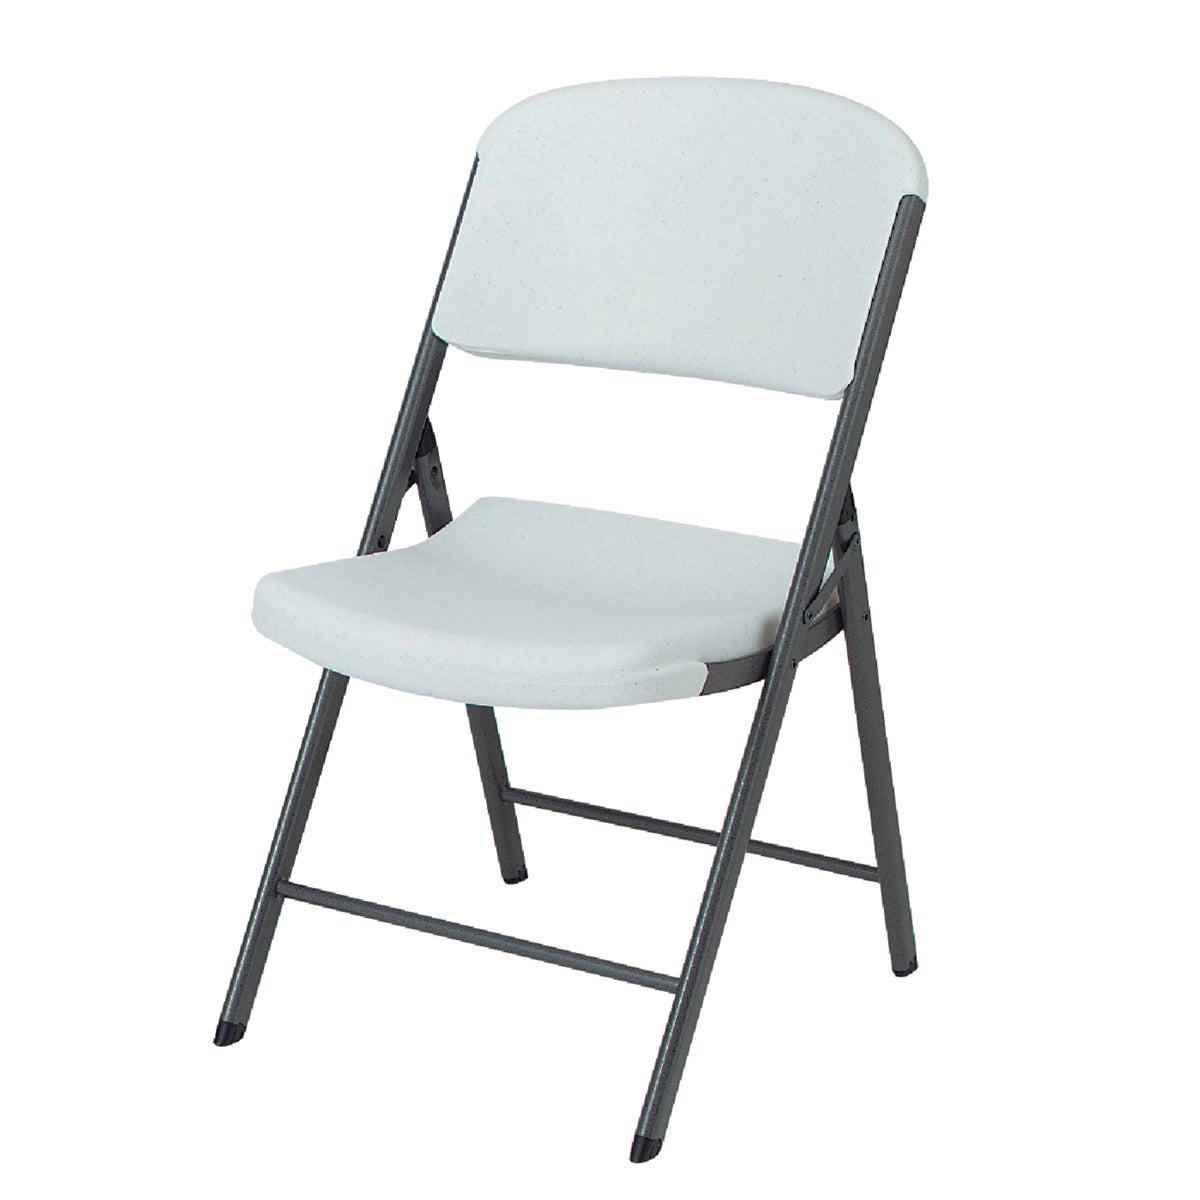 Lifetime 2802 Lifetime Contoured Folding Chair, White 2802